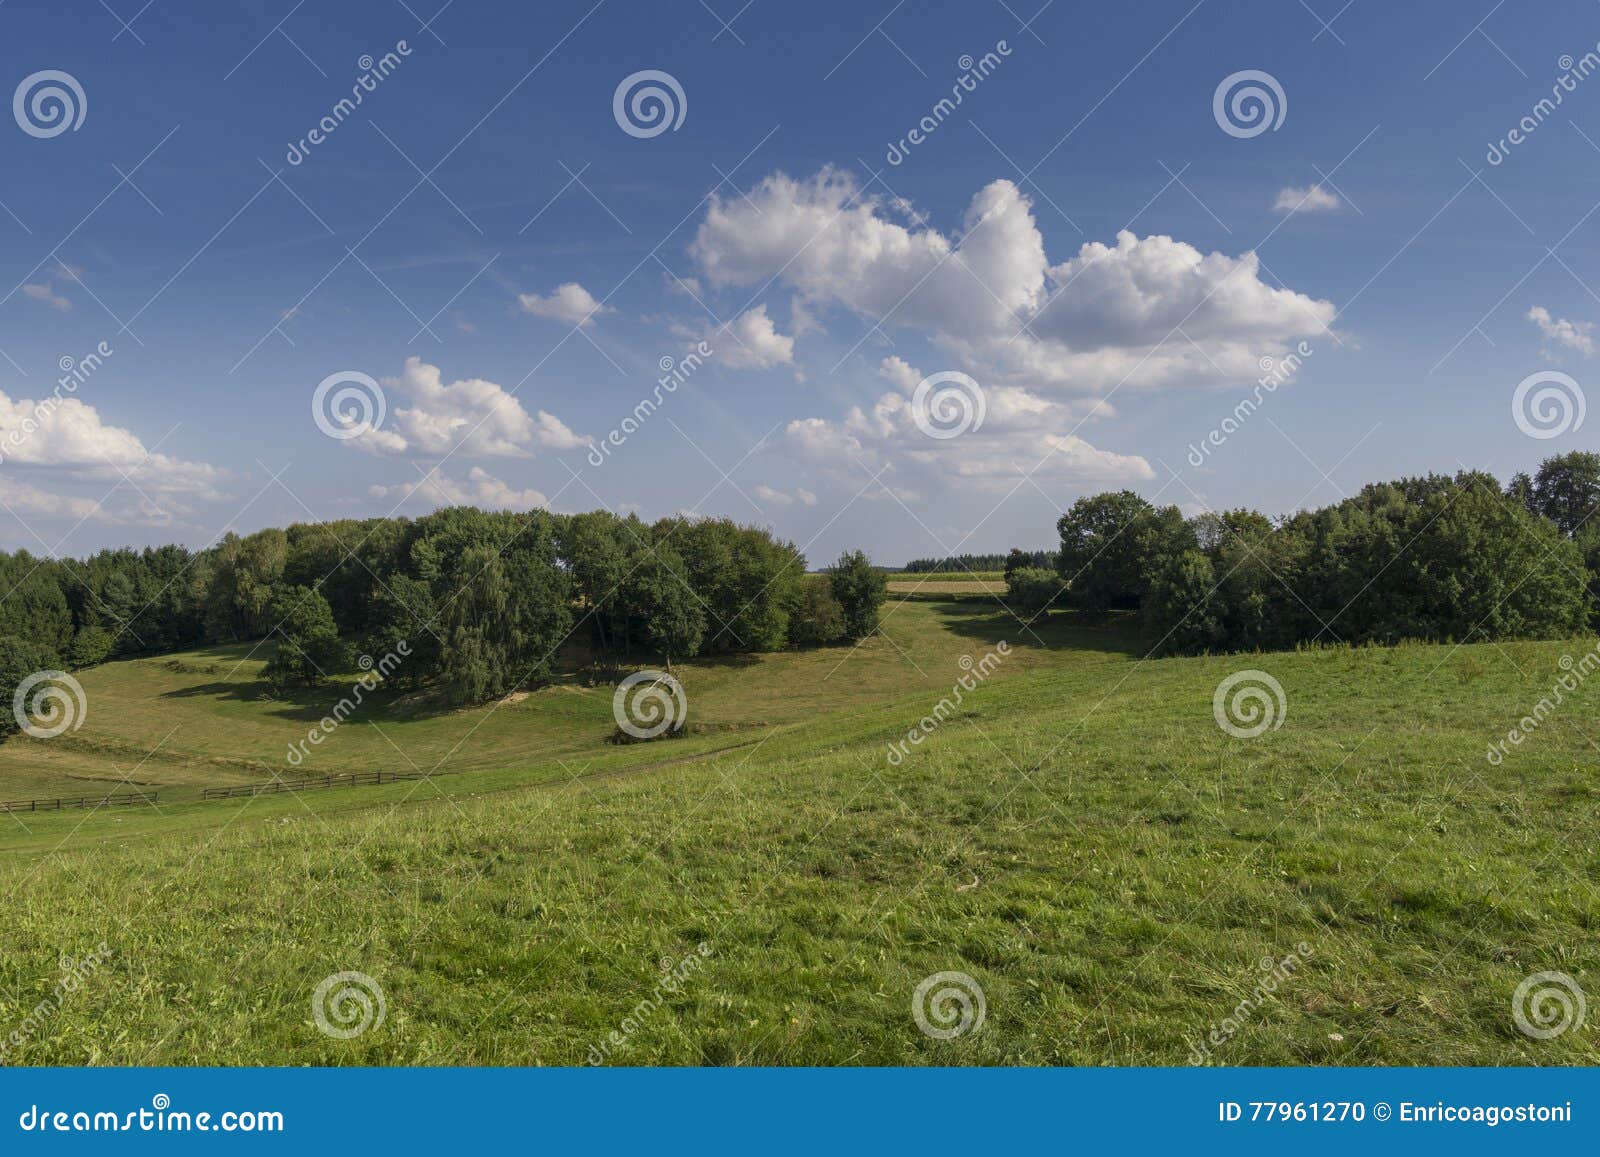 field in the region of hallertau, bayern (germany)